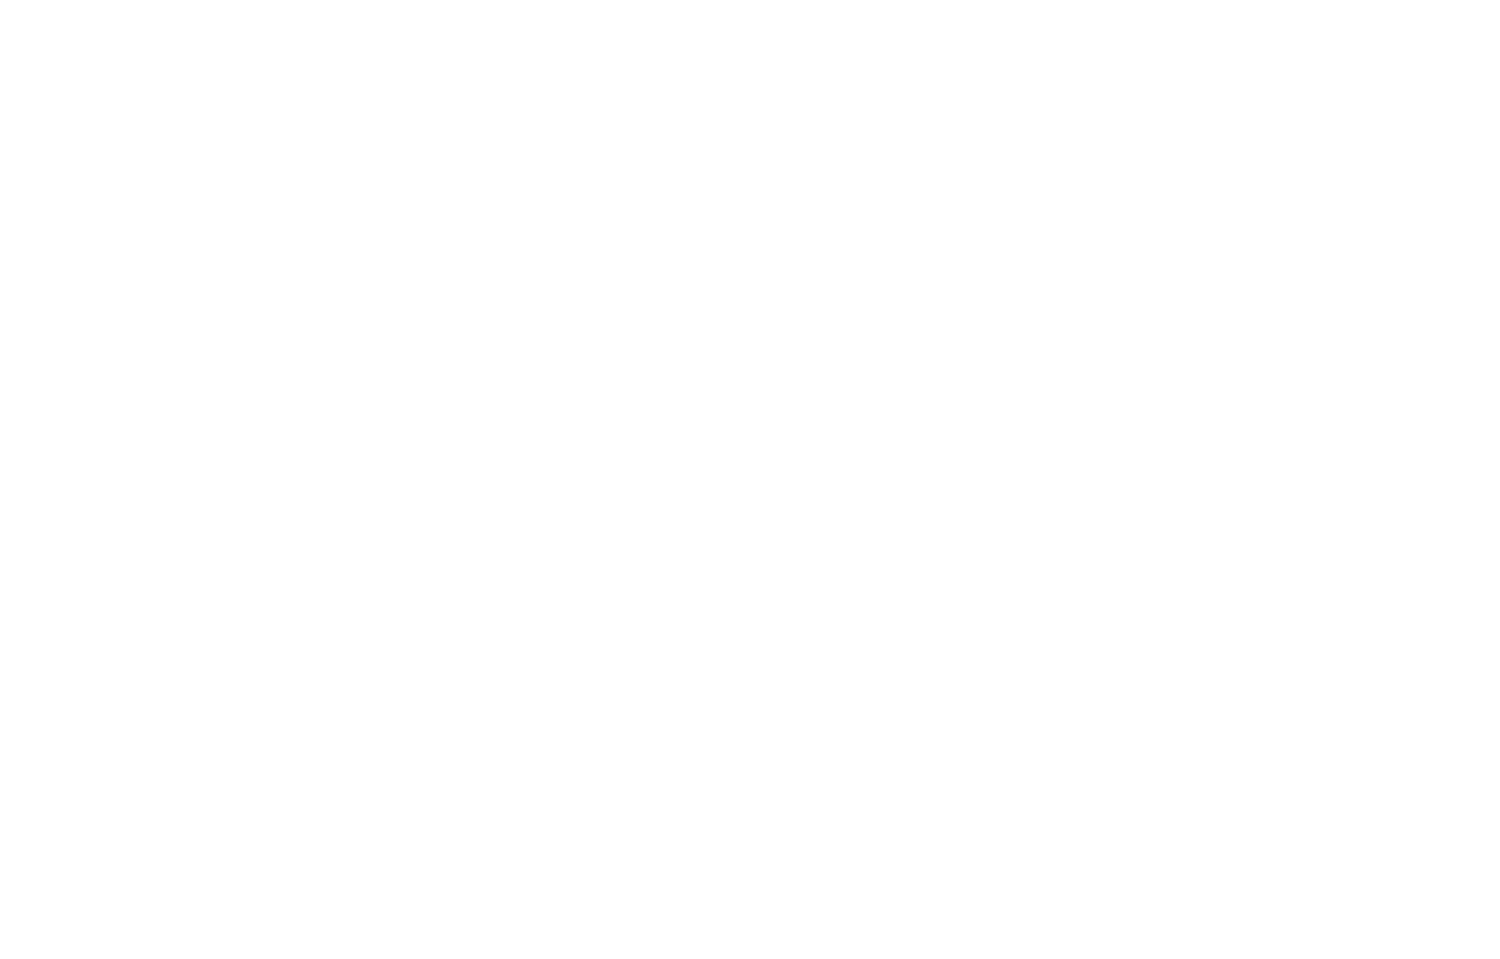 Sky Sabin Productions